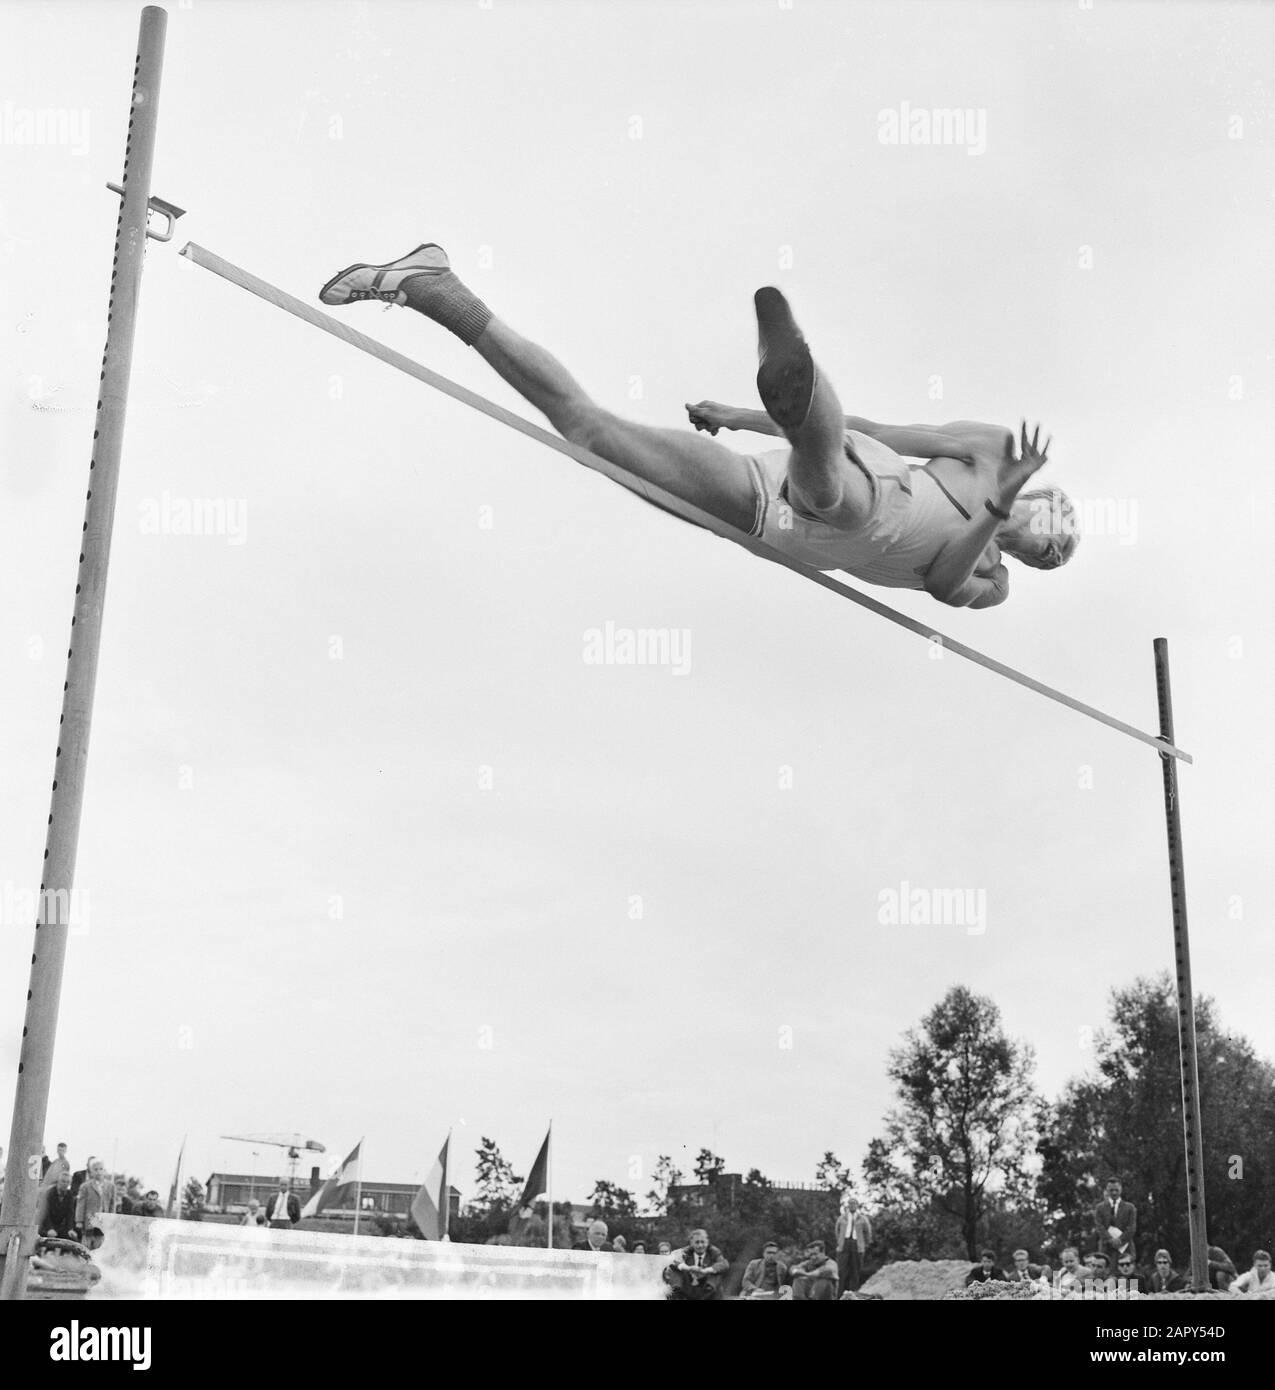 Tienkamp Nederland Rein tuber High Jump action Date: 5 août 1962 mots clés: HIGHJUP, TIENKAMPS Banque D'Images